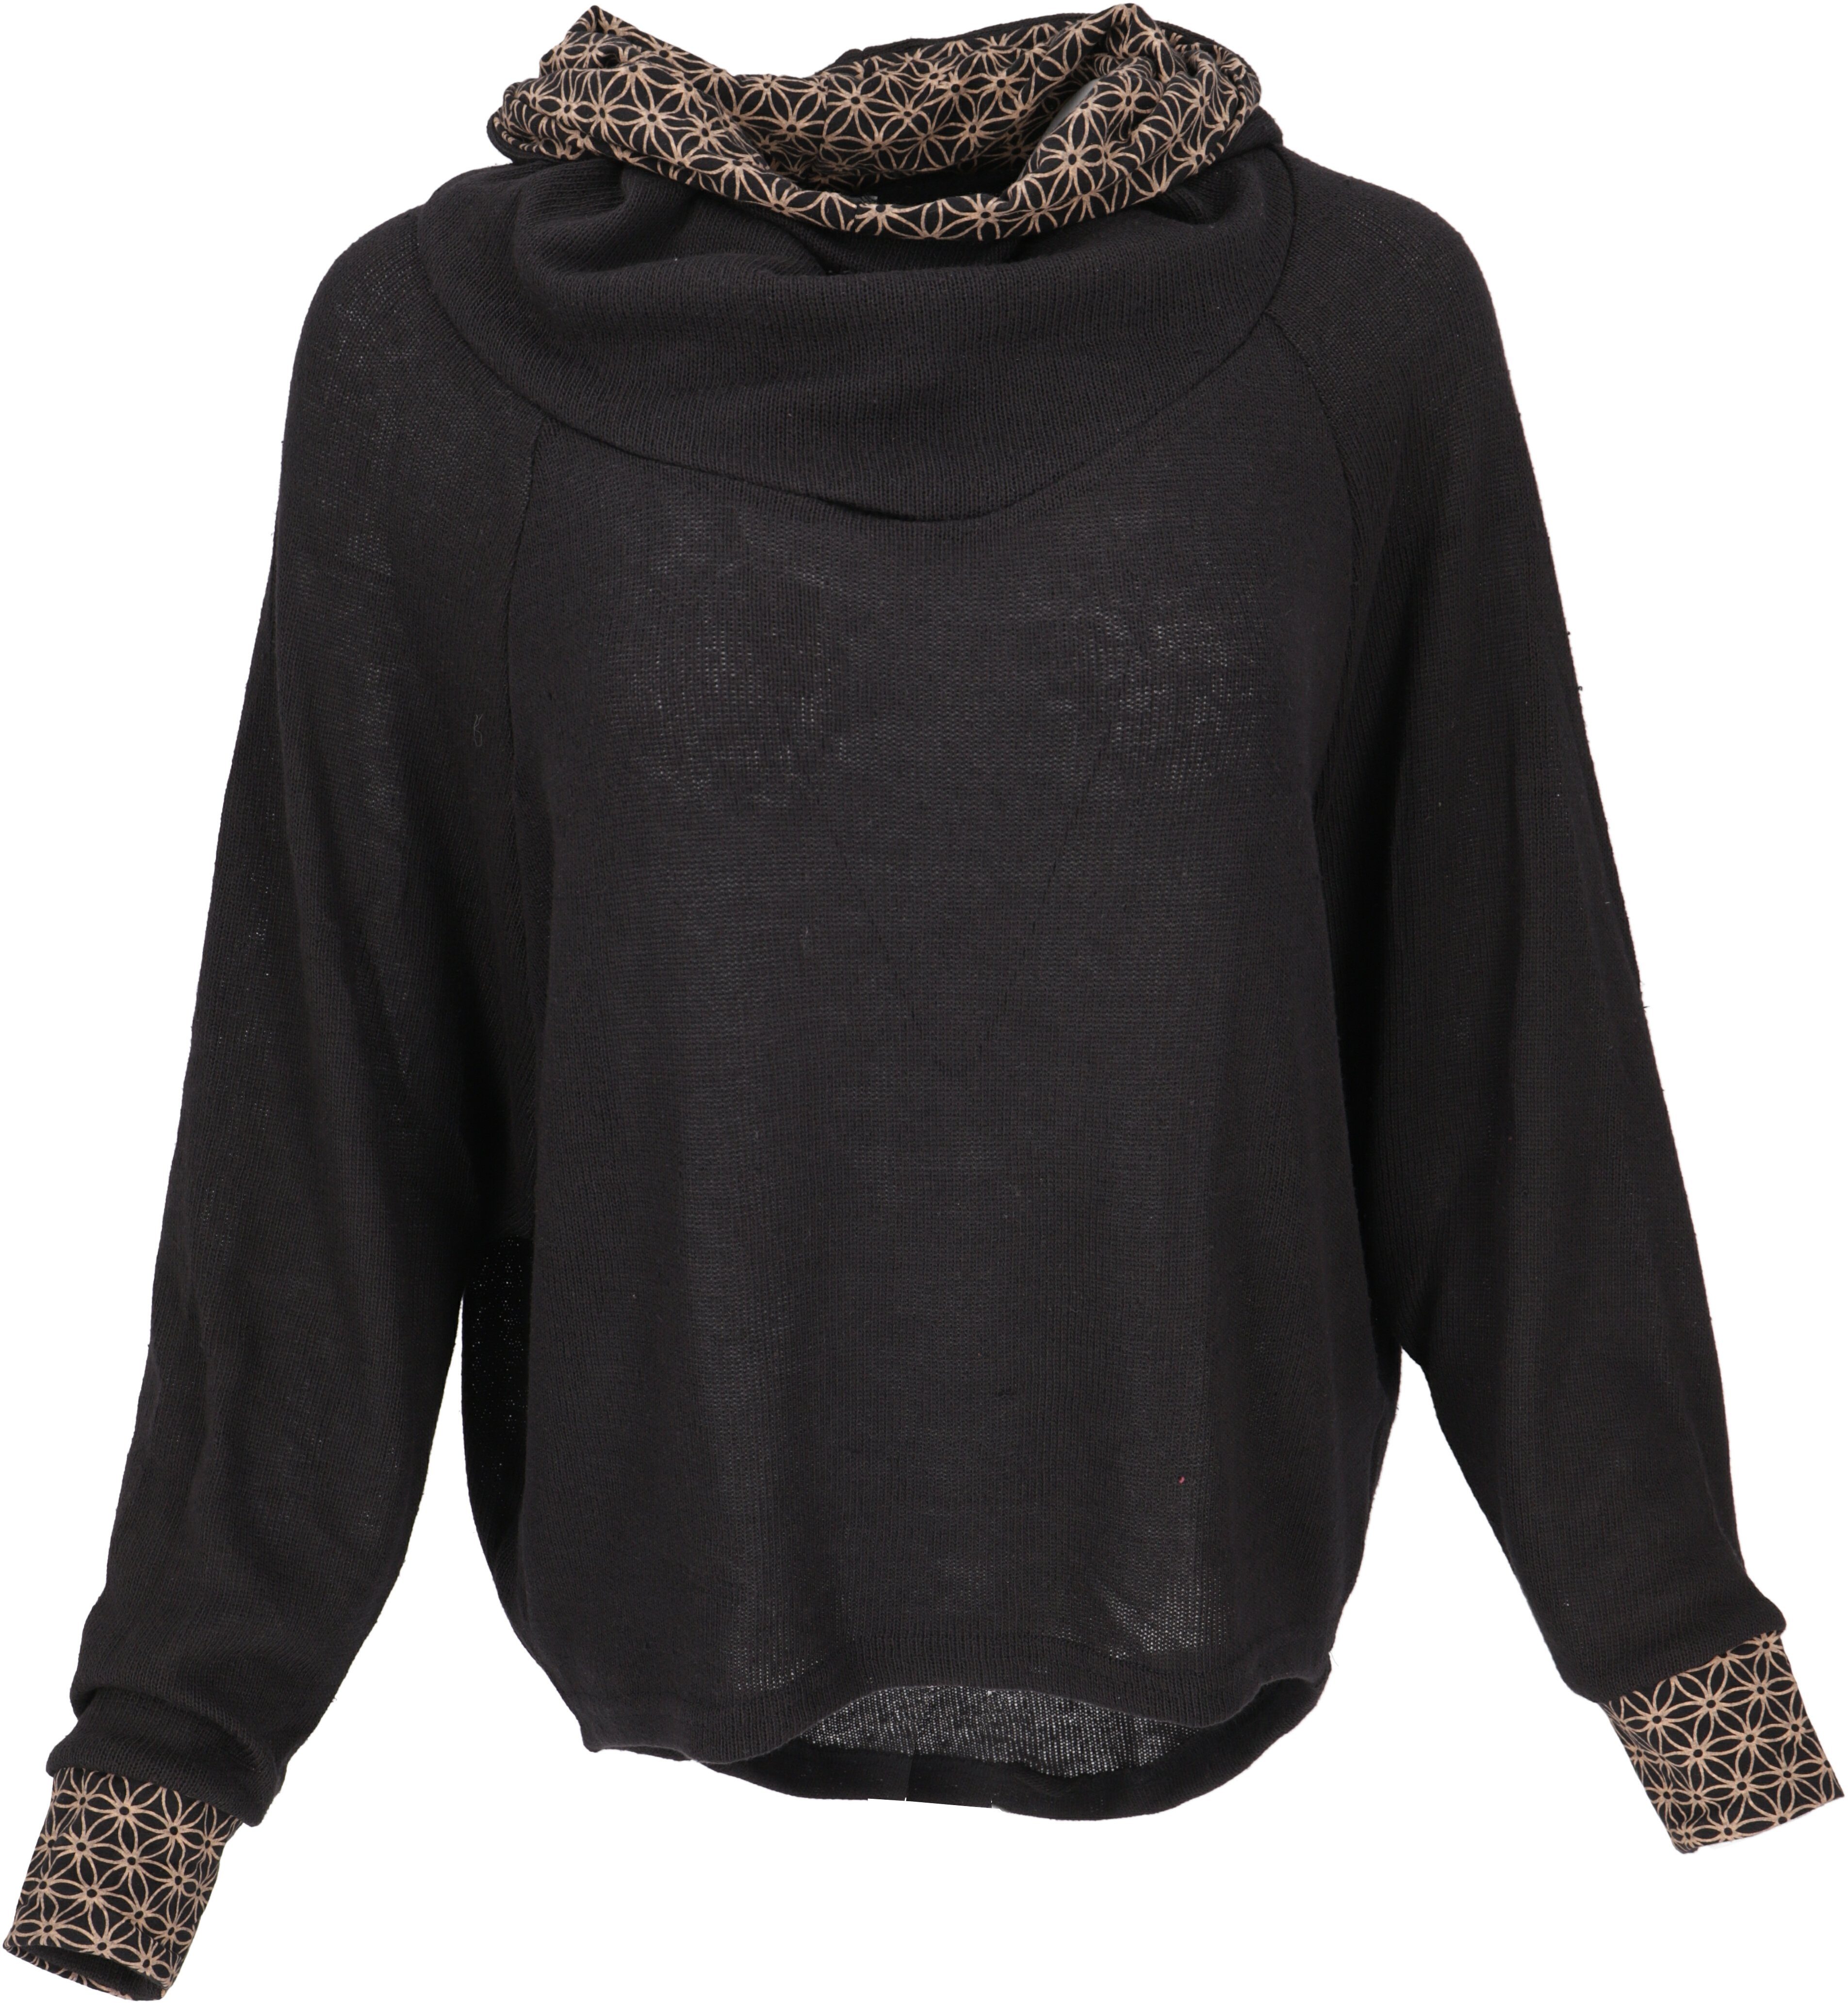 Guru-Shop Longsleeve Sweatshirt, Kapuzenpullover -.. Pullover, alternative Hoody, schwarz Bekleidung